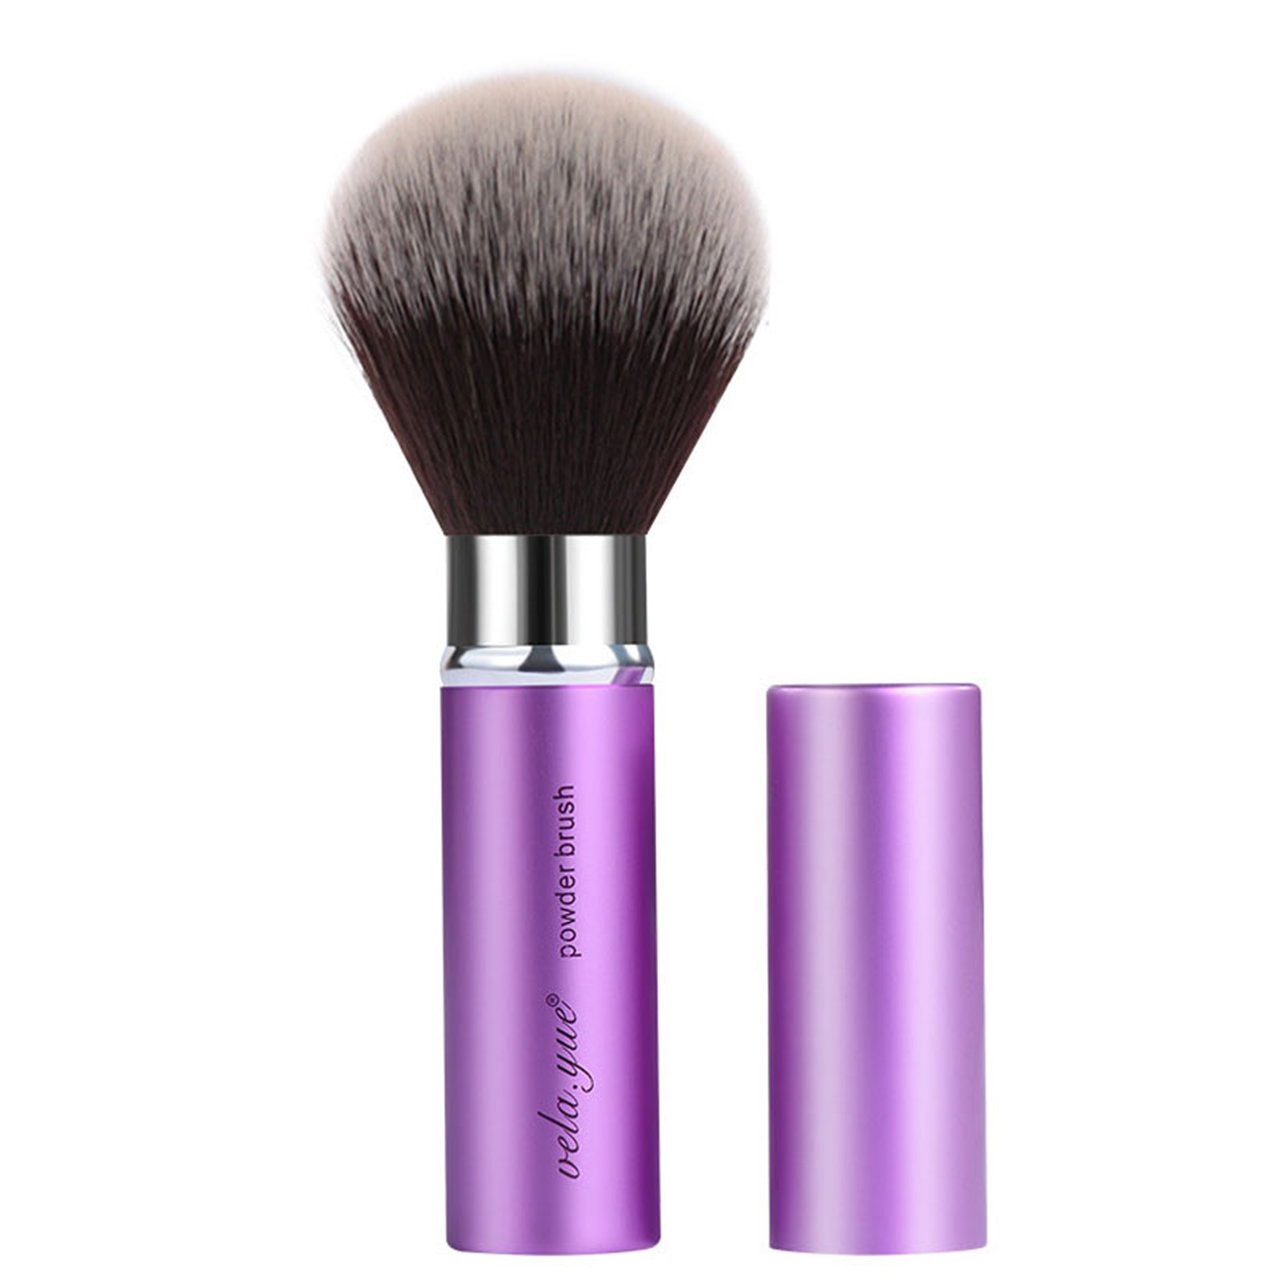 Chanel LES PINCEAUX powder kabuki + water fresh foundation brush